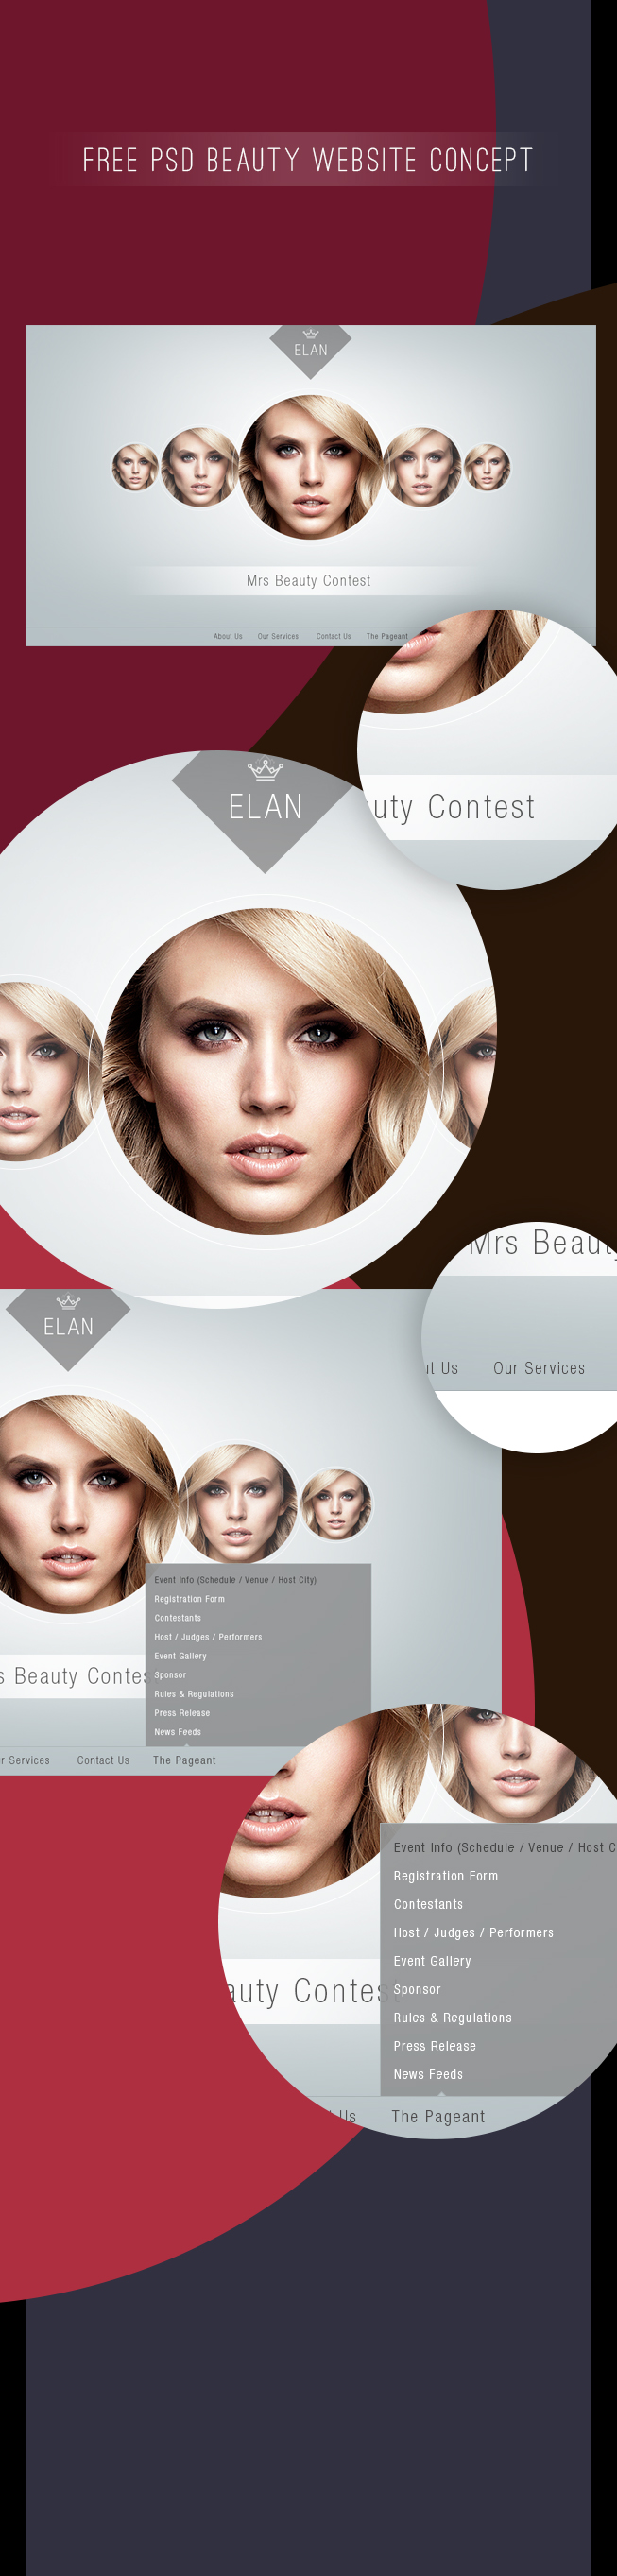 Free PSD Beauty Website Design Concept